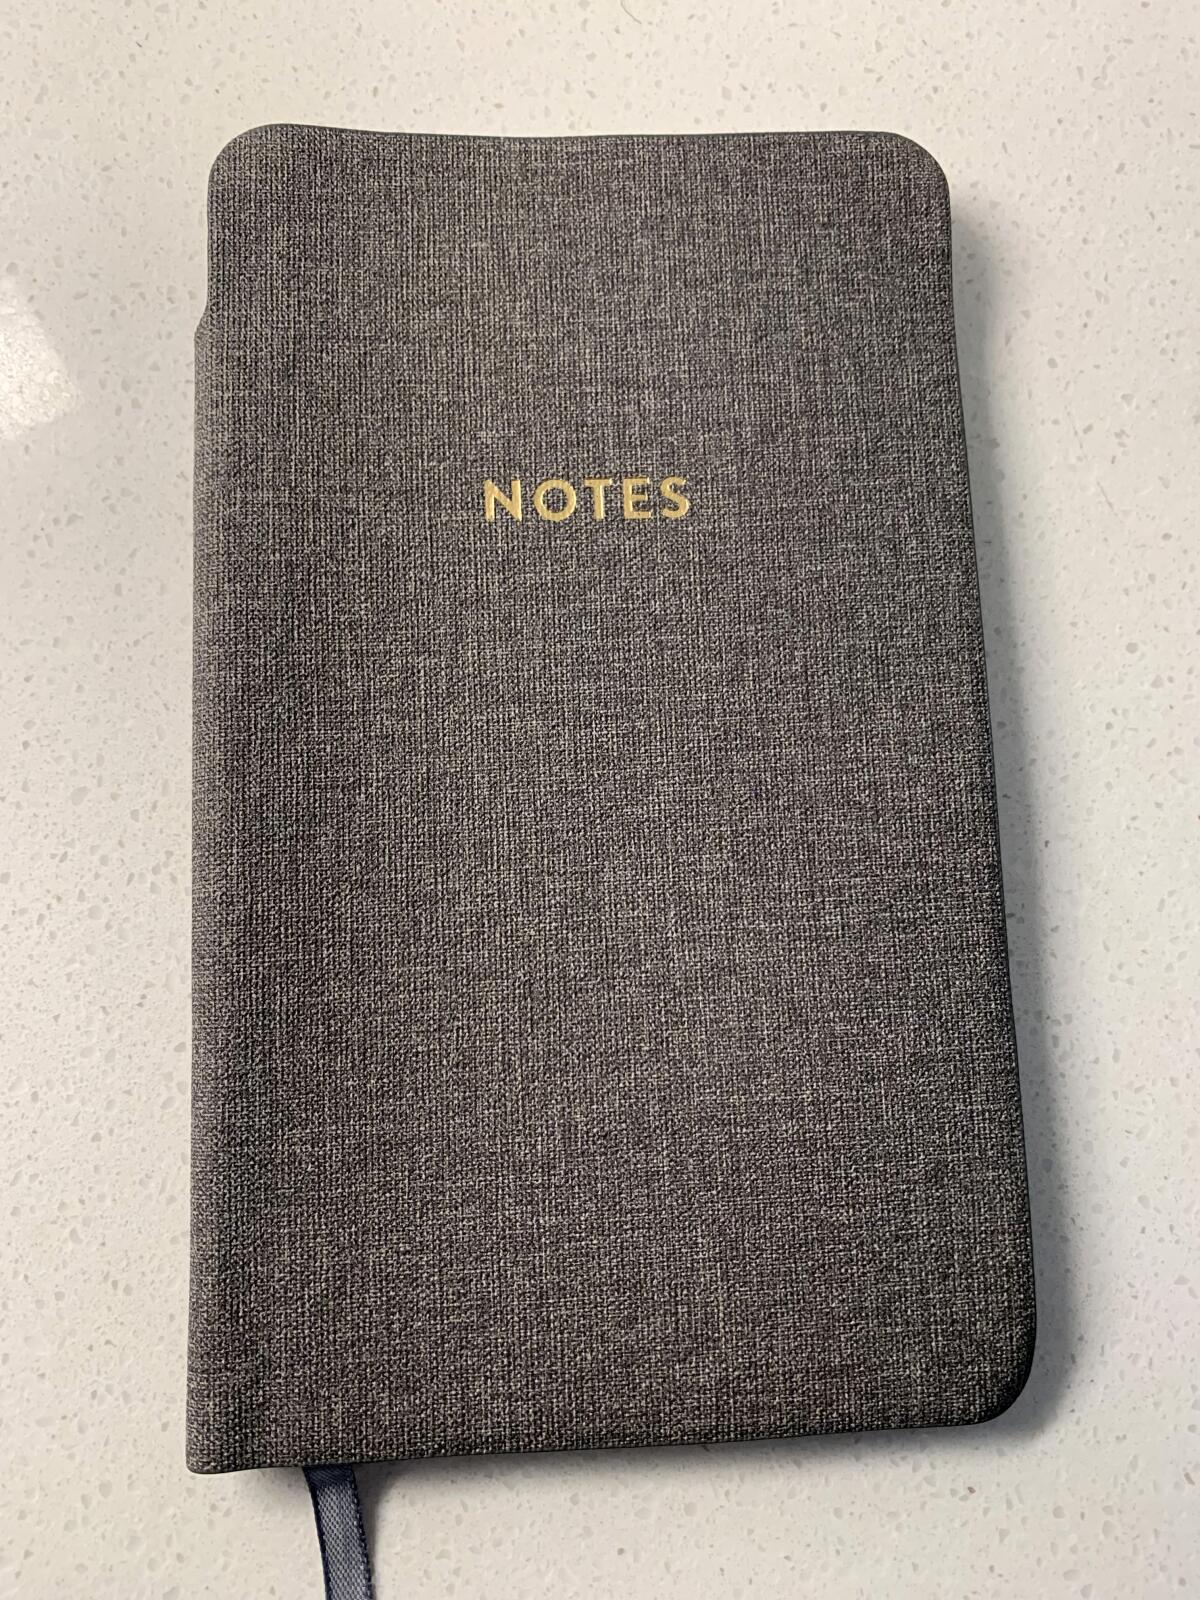 Tubbs' notebook.